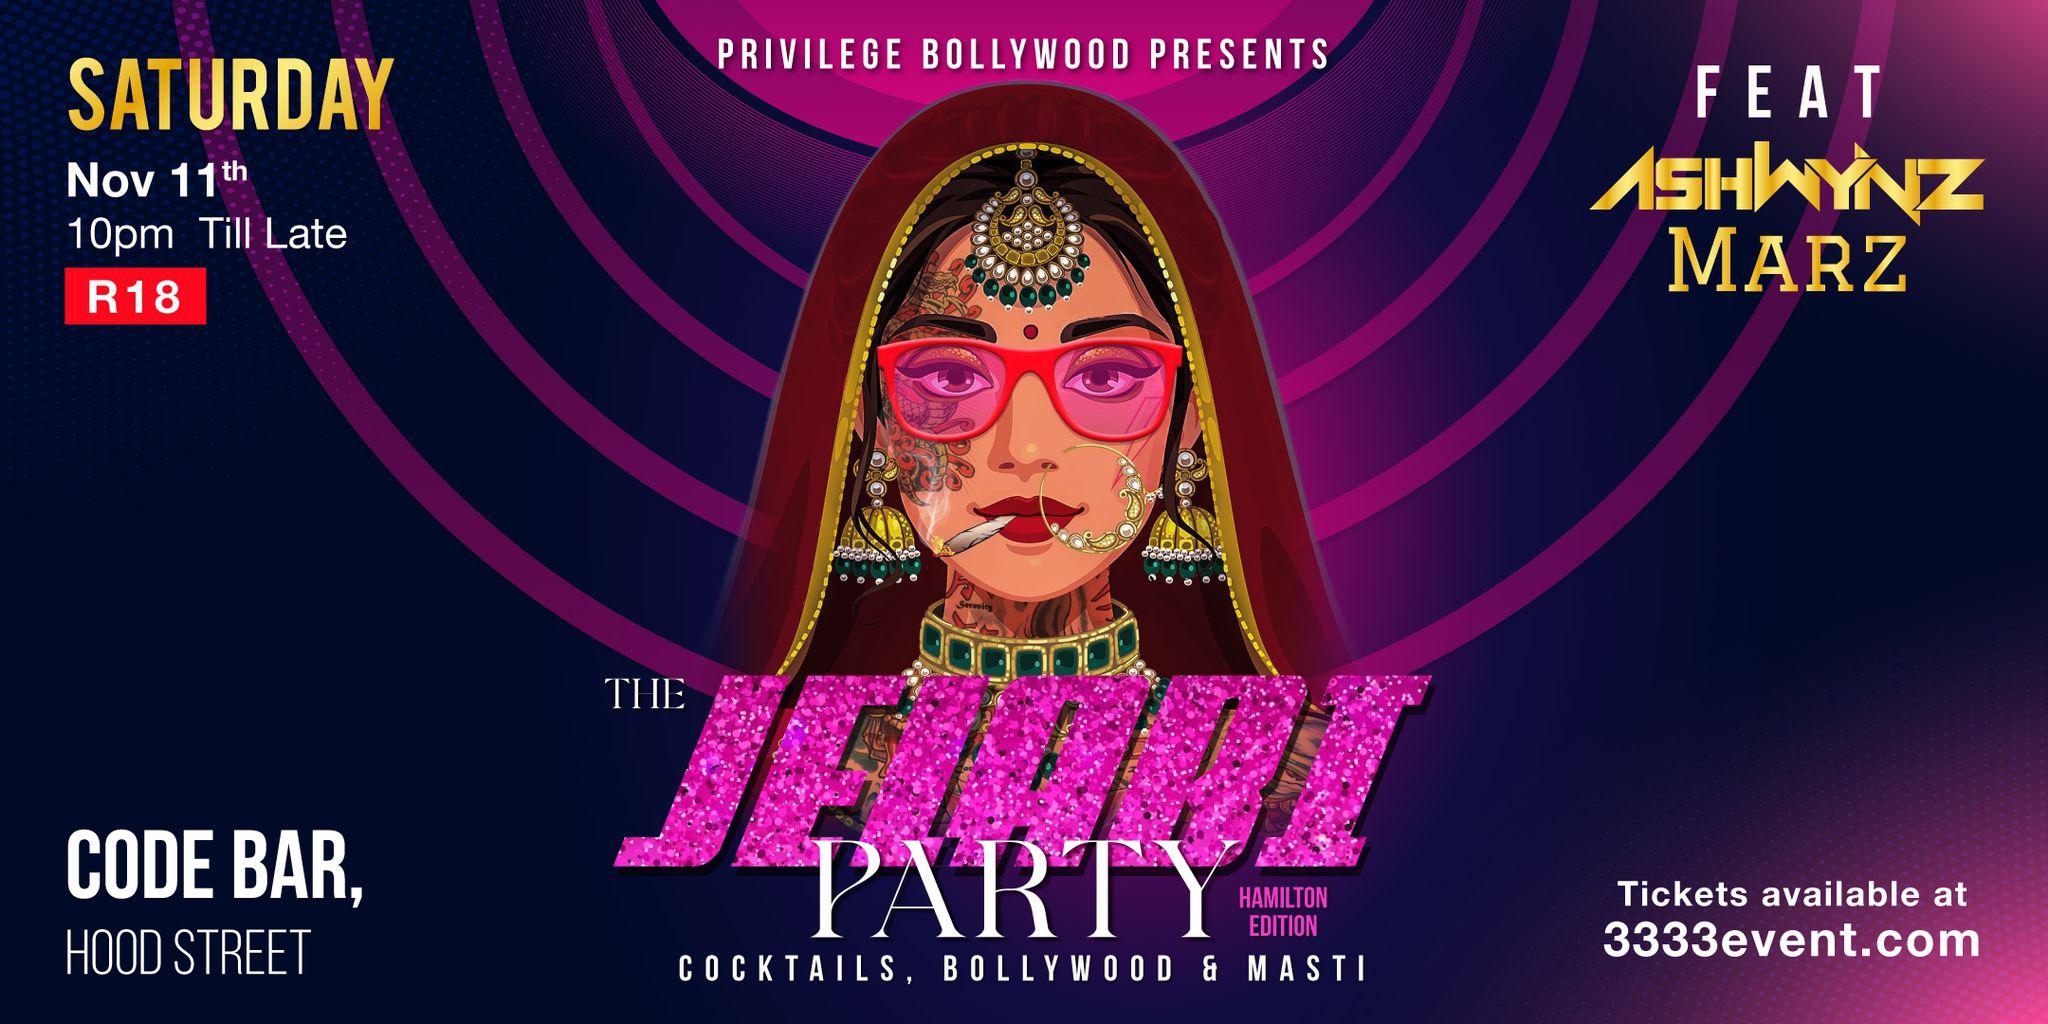 🌟Privilege Bollywood Presents: THE JELABI PARTY!🌟